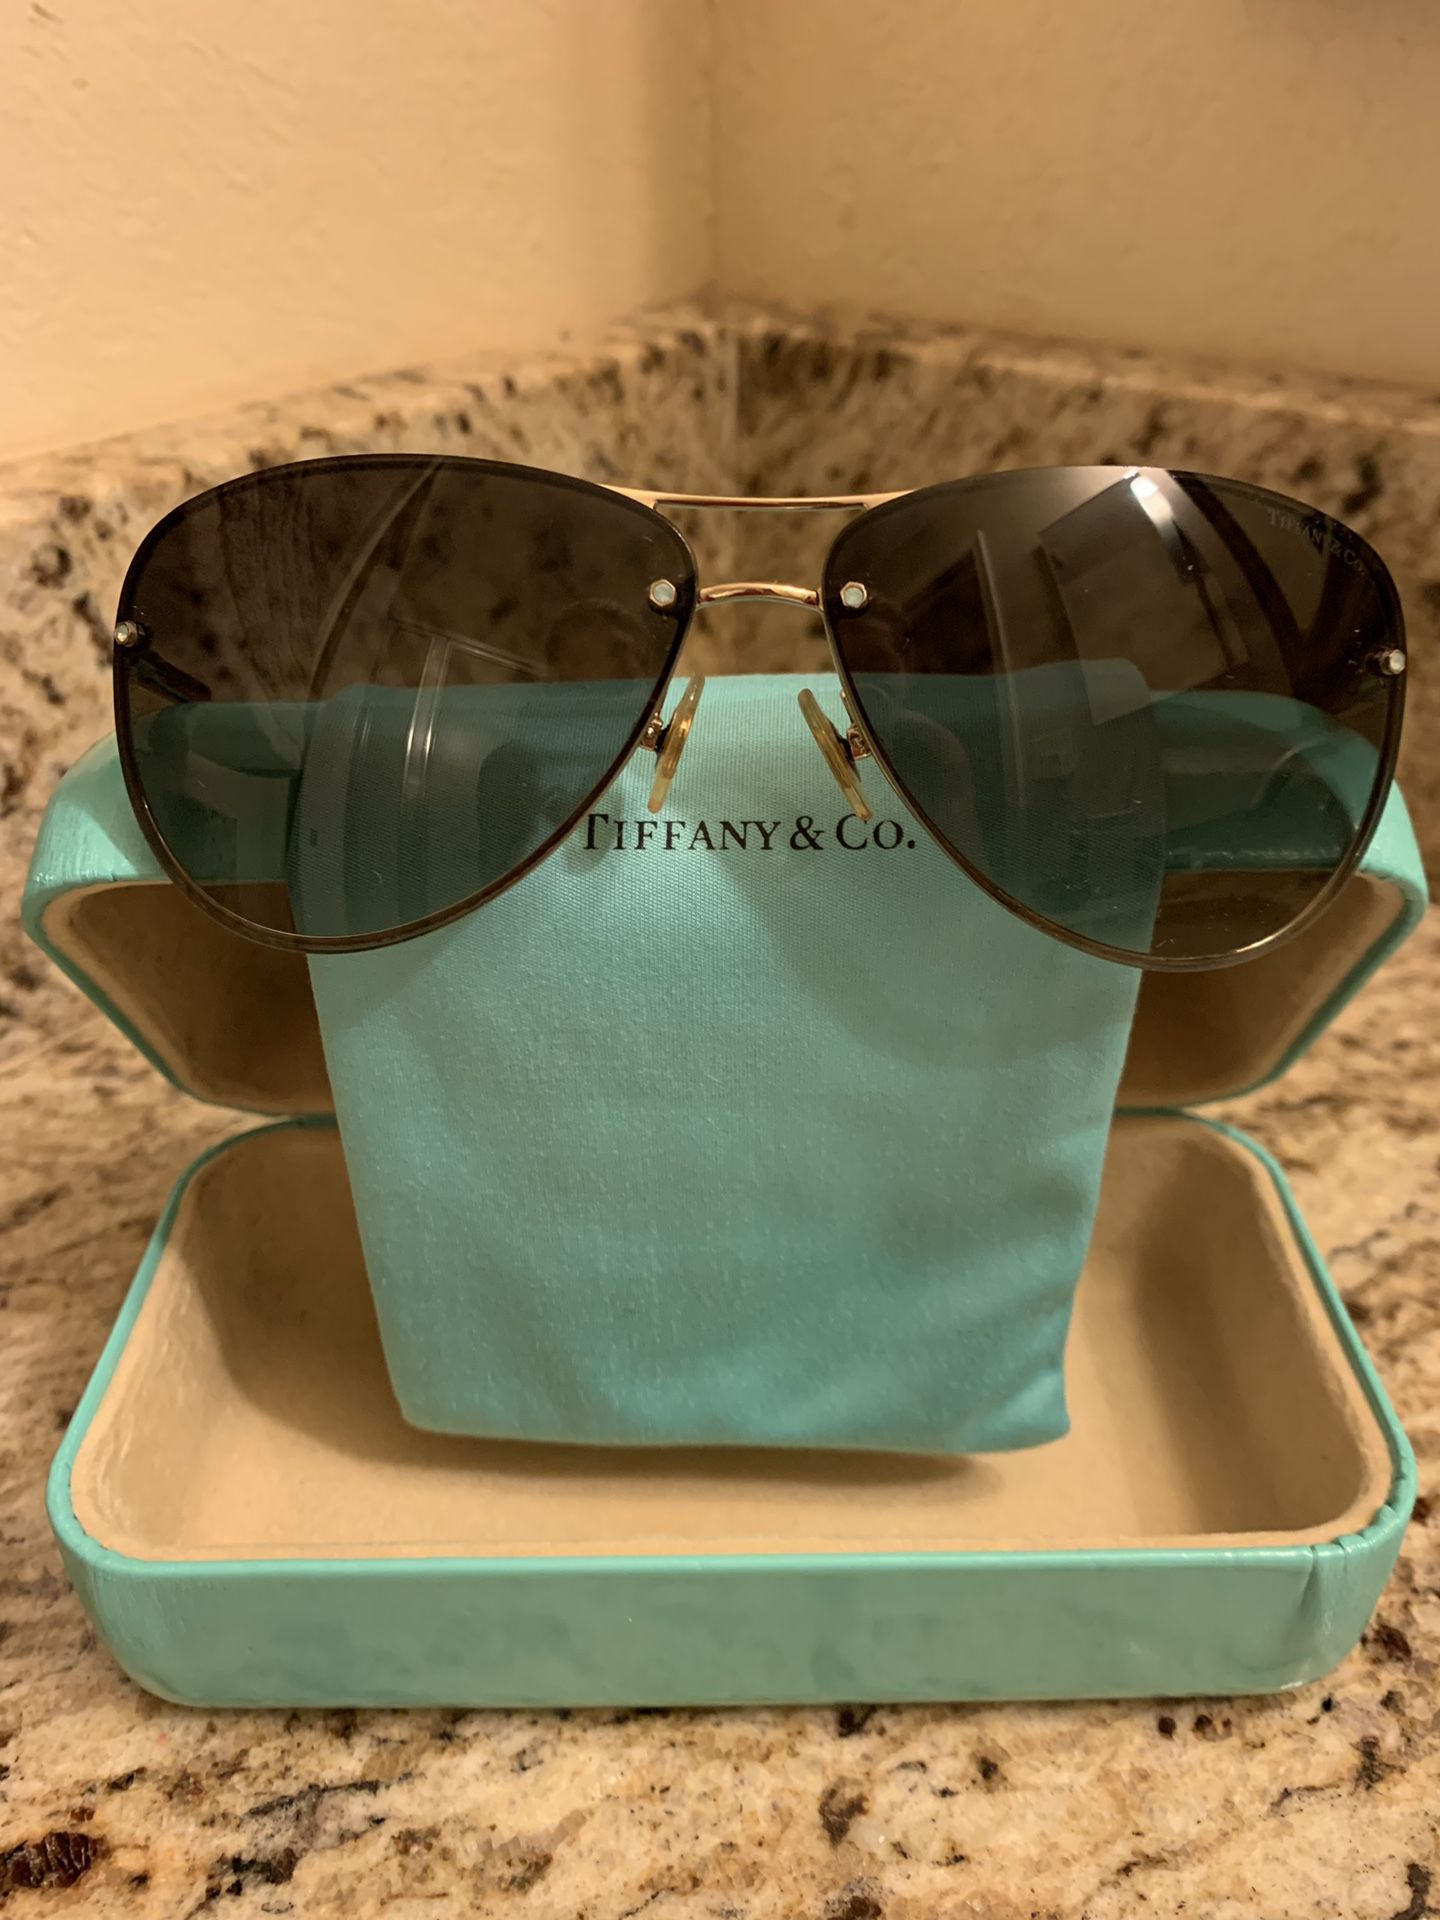 Genuine Tiffany aviator style sunglasses